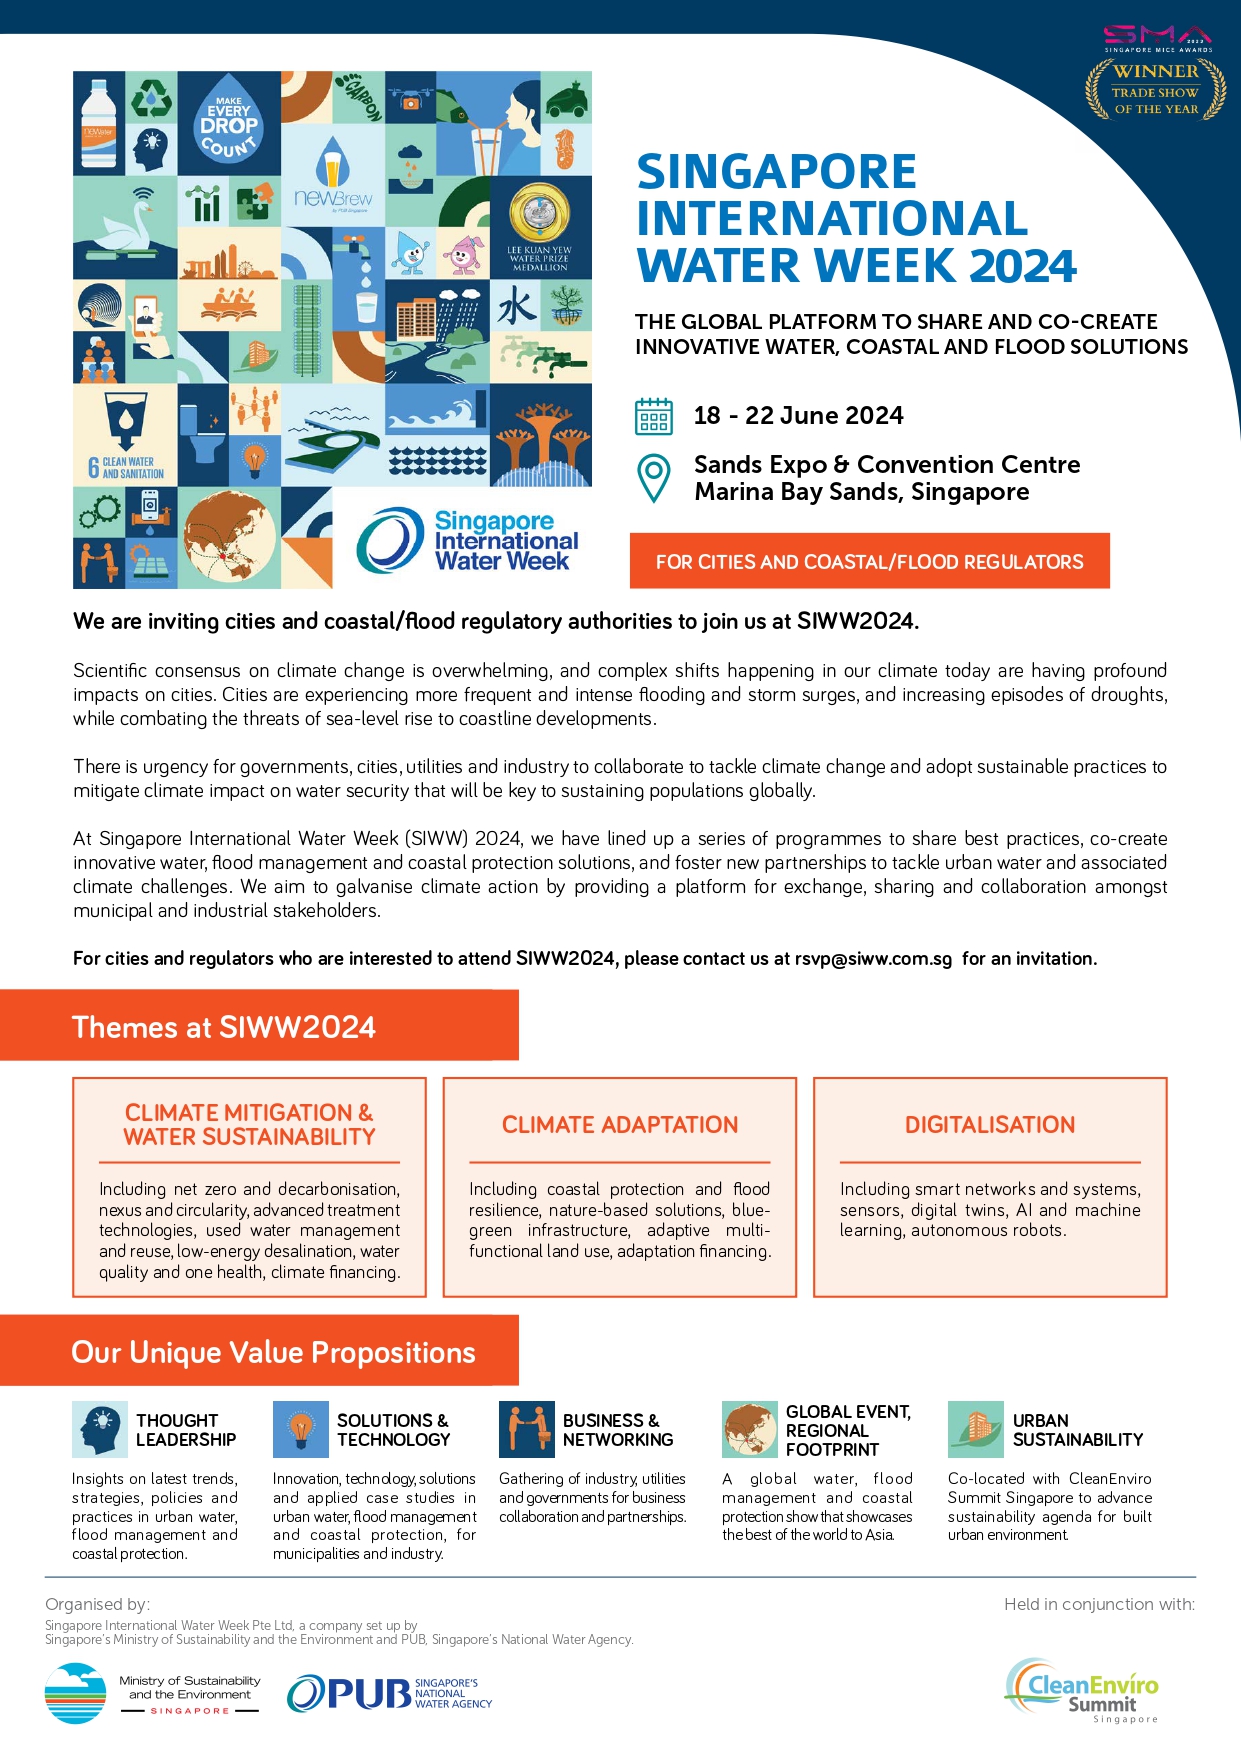 SIWW 2024 - For Cities and Coastal/Flood Regulators